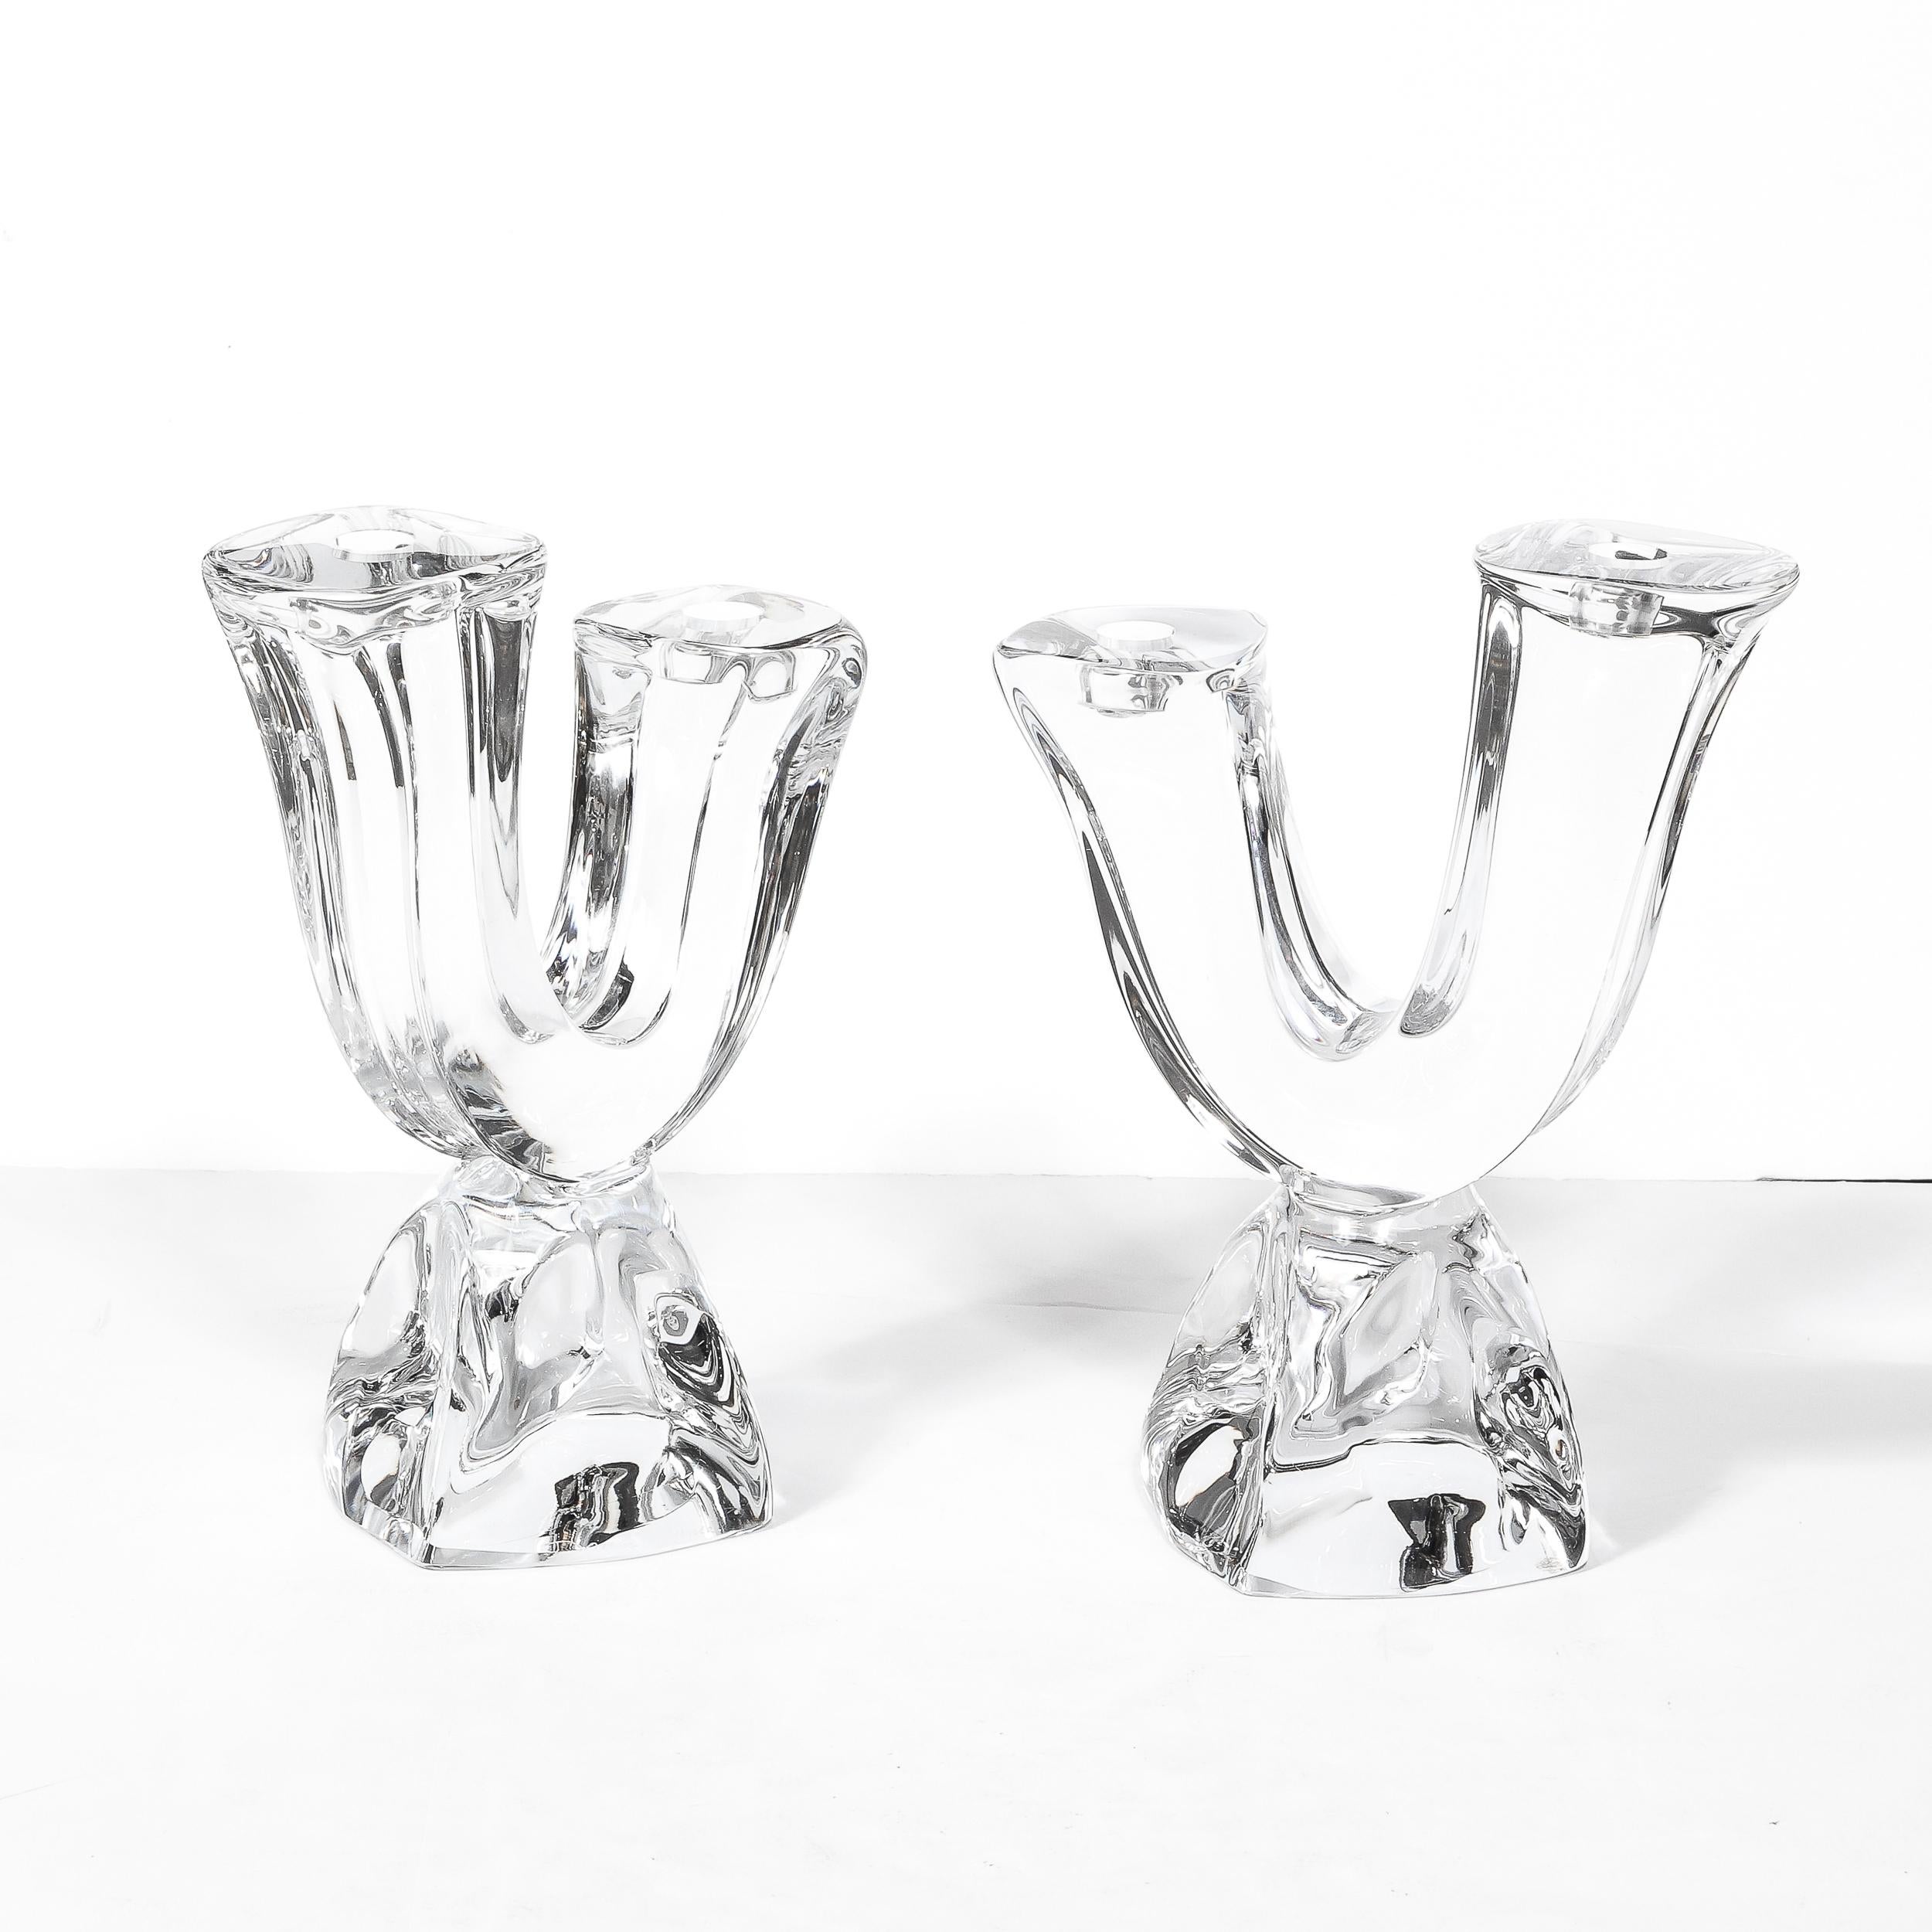 Glass Pair of Mid-Century Modernist Sculptural Crystal Candelabras signed Daum